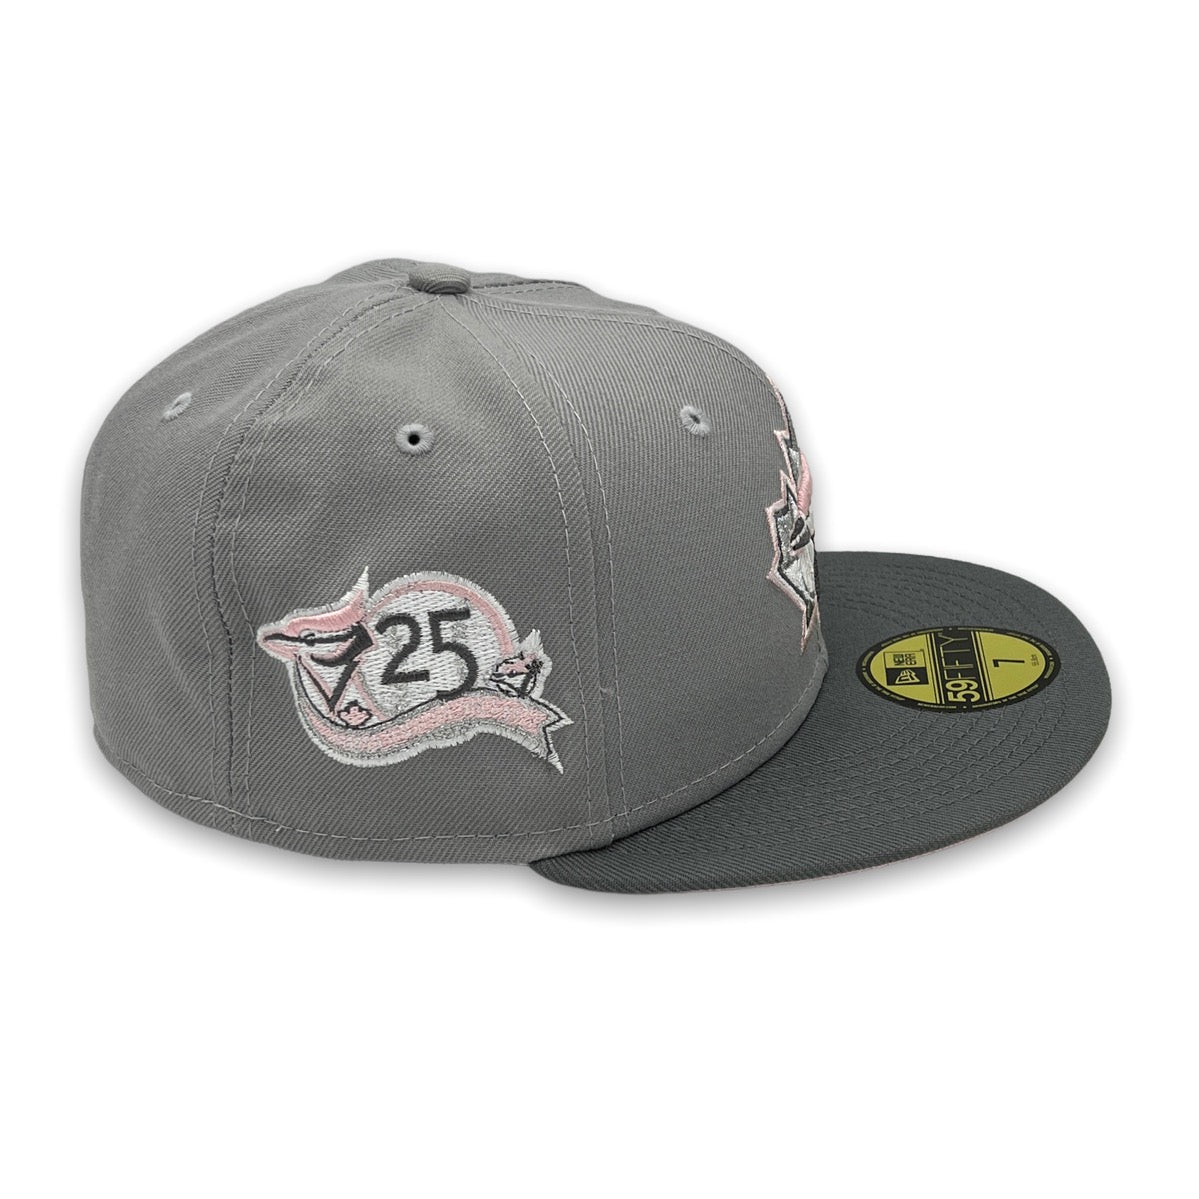 San Jose Sharks New Era Fitted 59Fifty Hat (BLACK AQUA GRAY UNDER BRIM)